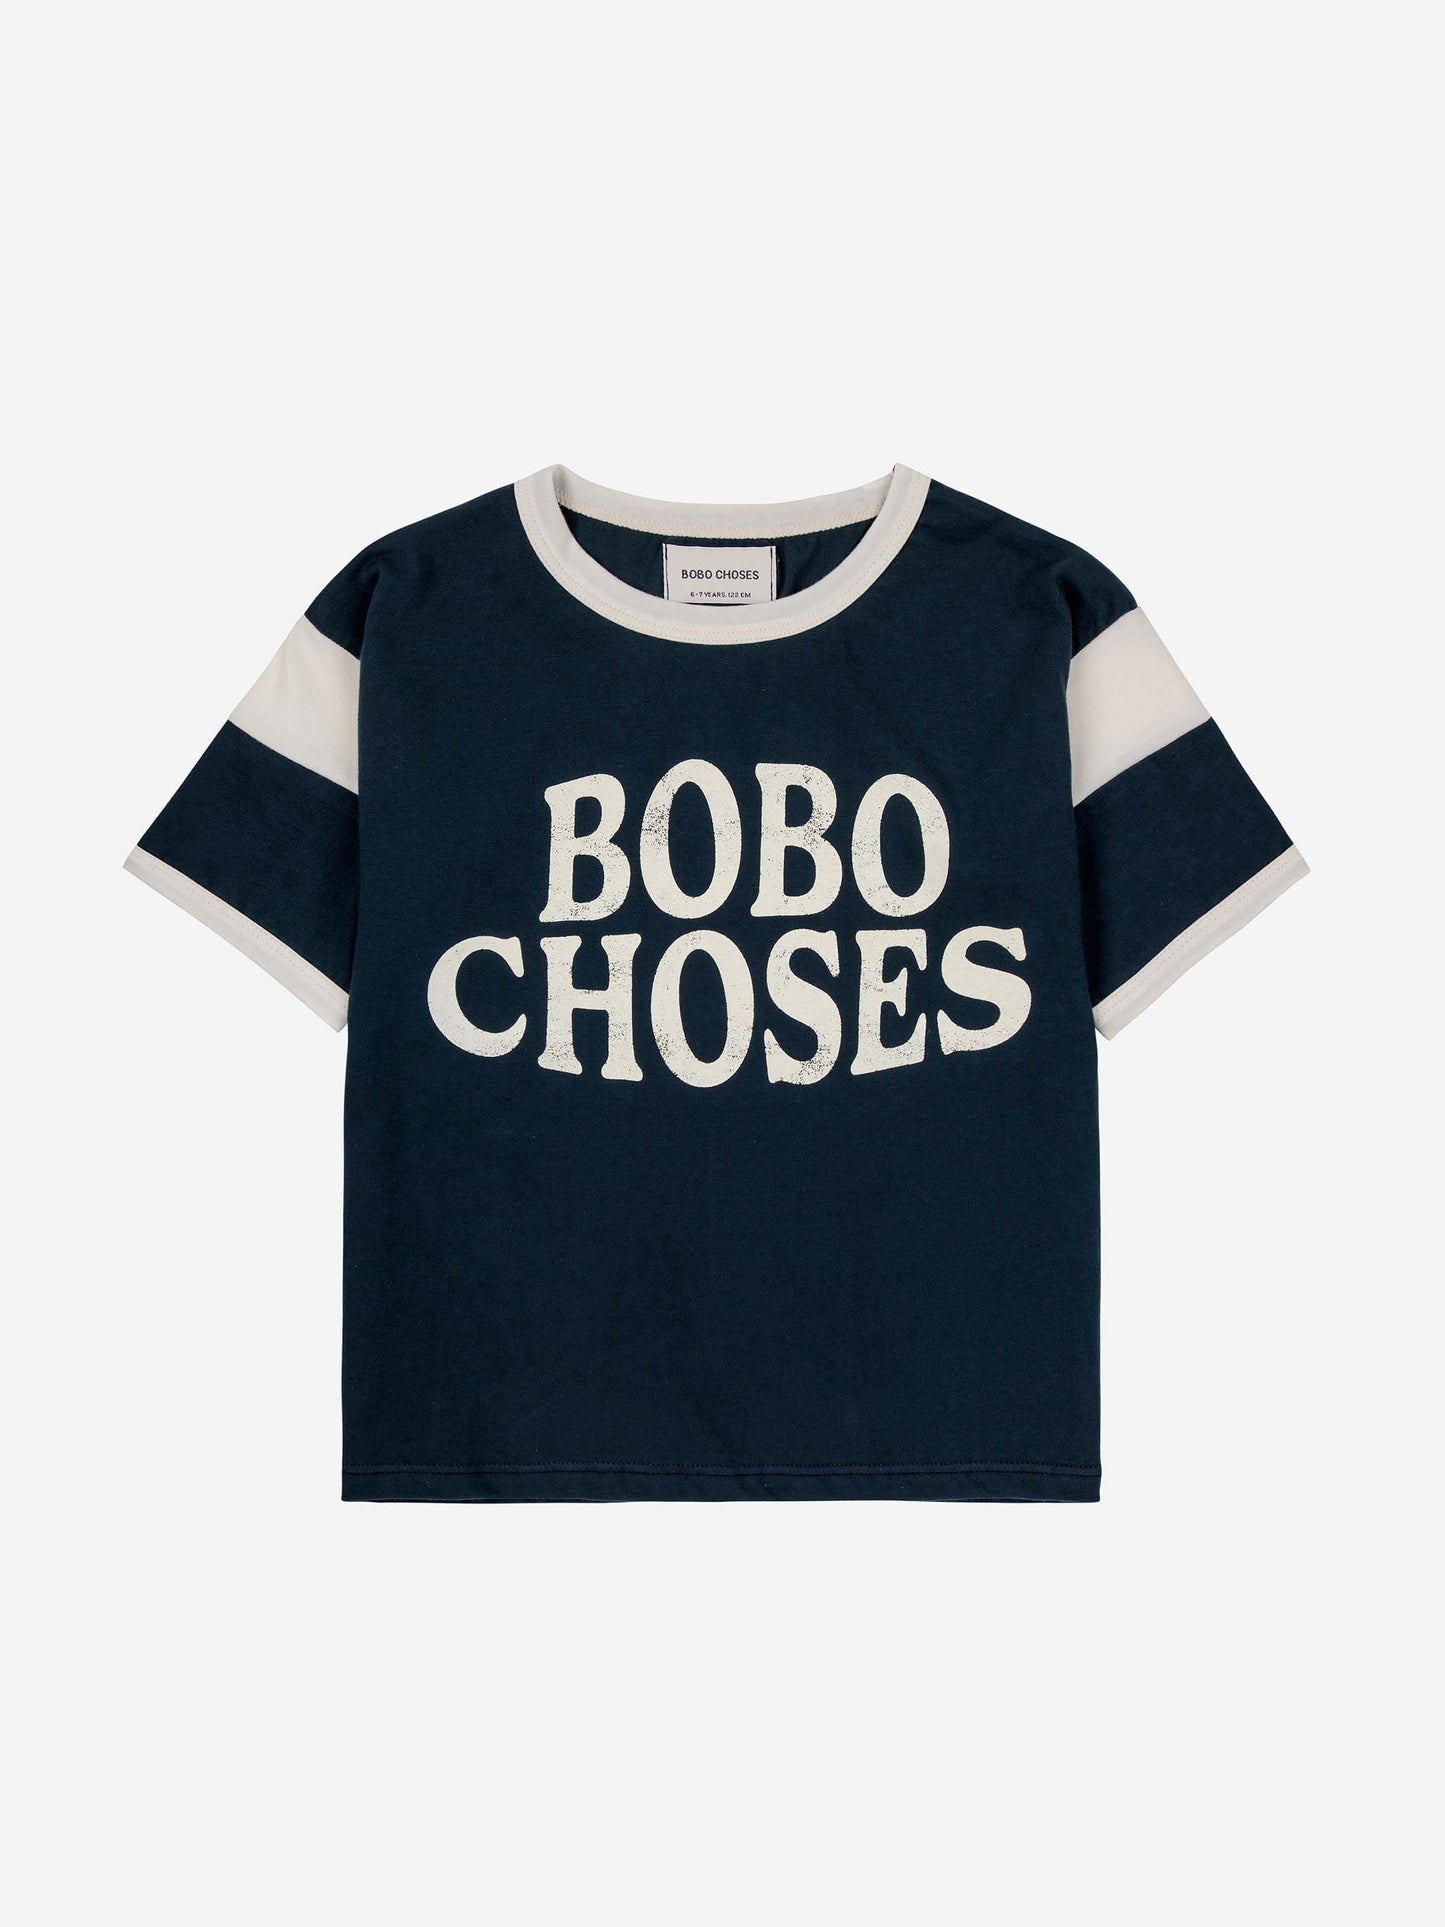 Bobo Choses navy blue T-shirt